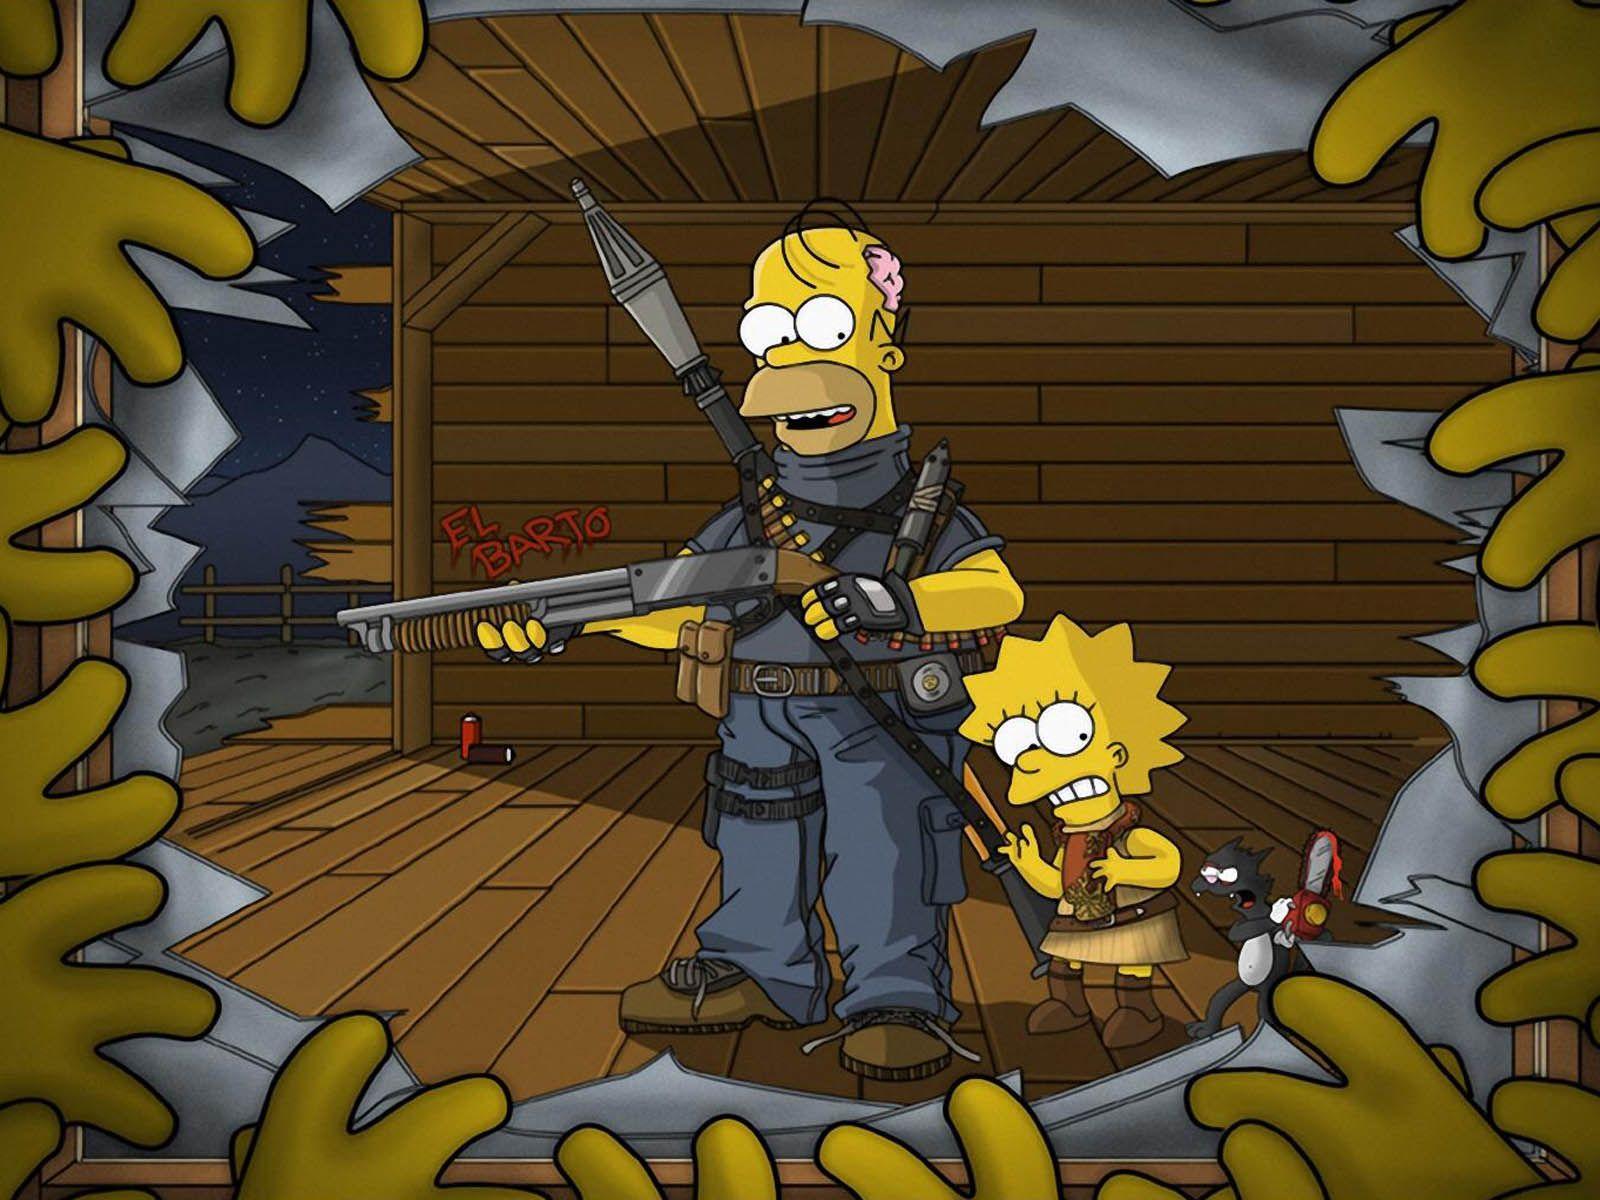 The Simpson Wallpaper